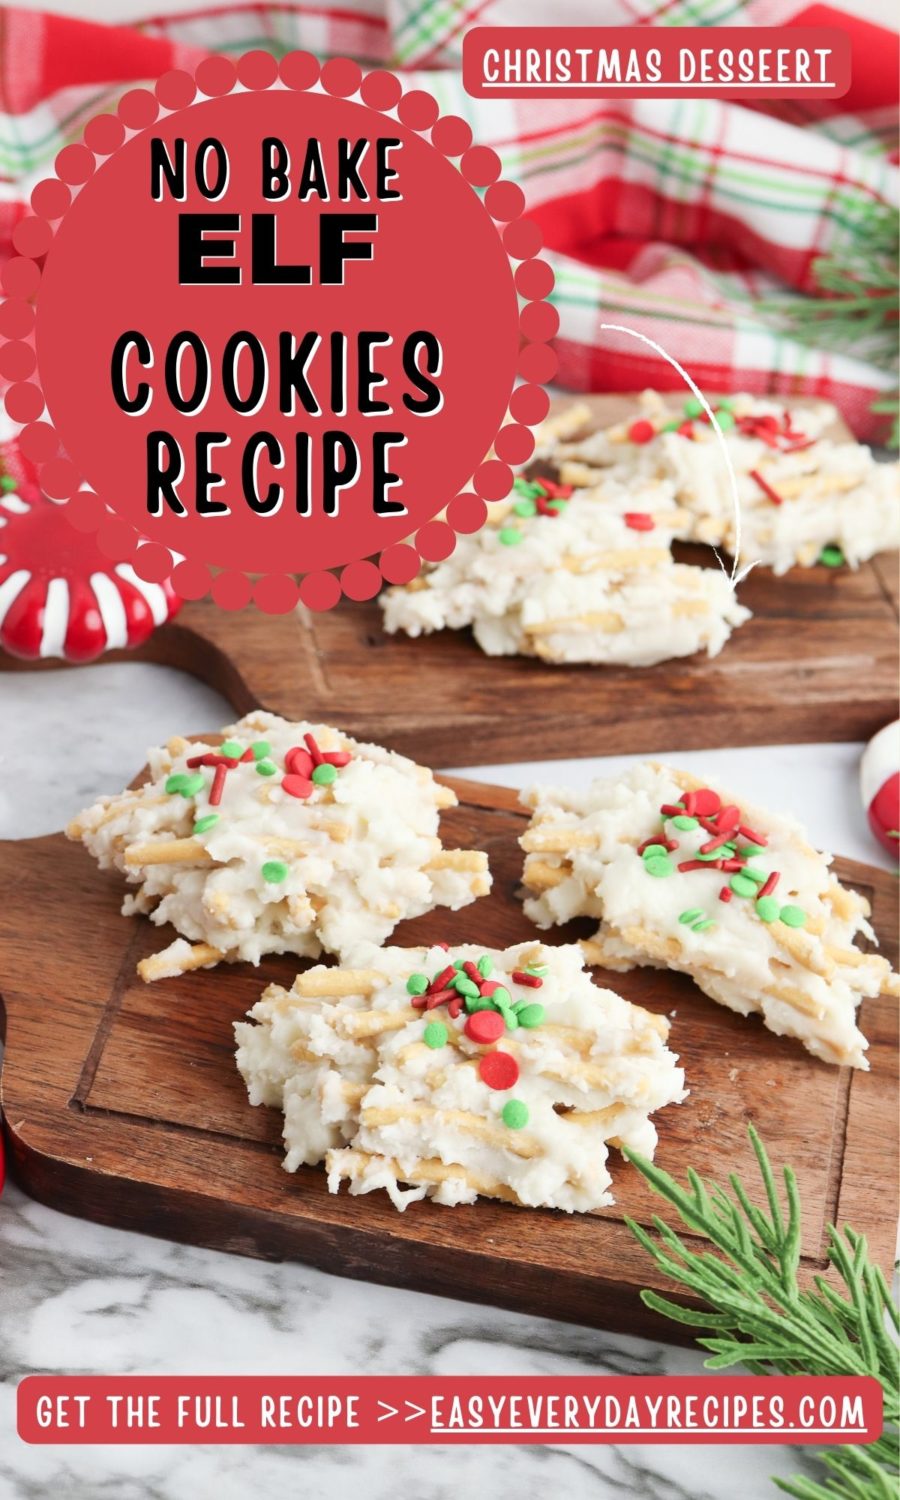 No bake elf cookies recipe.